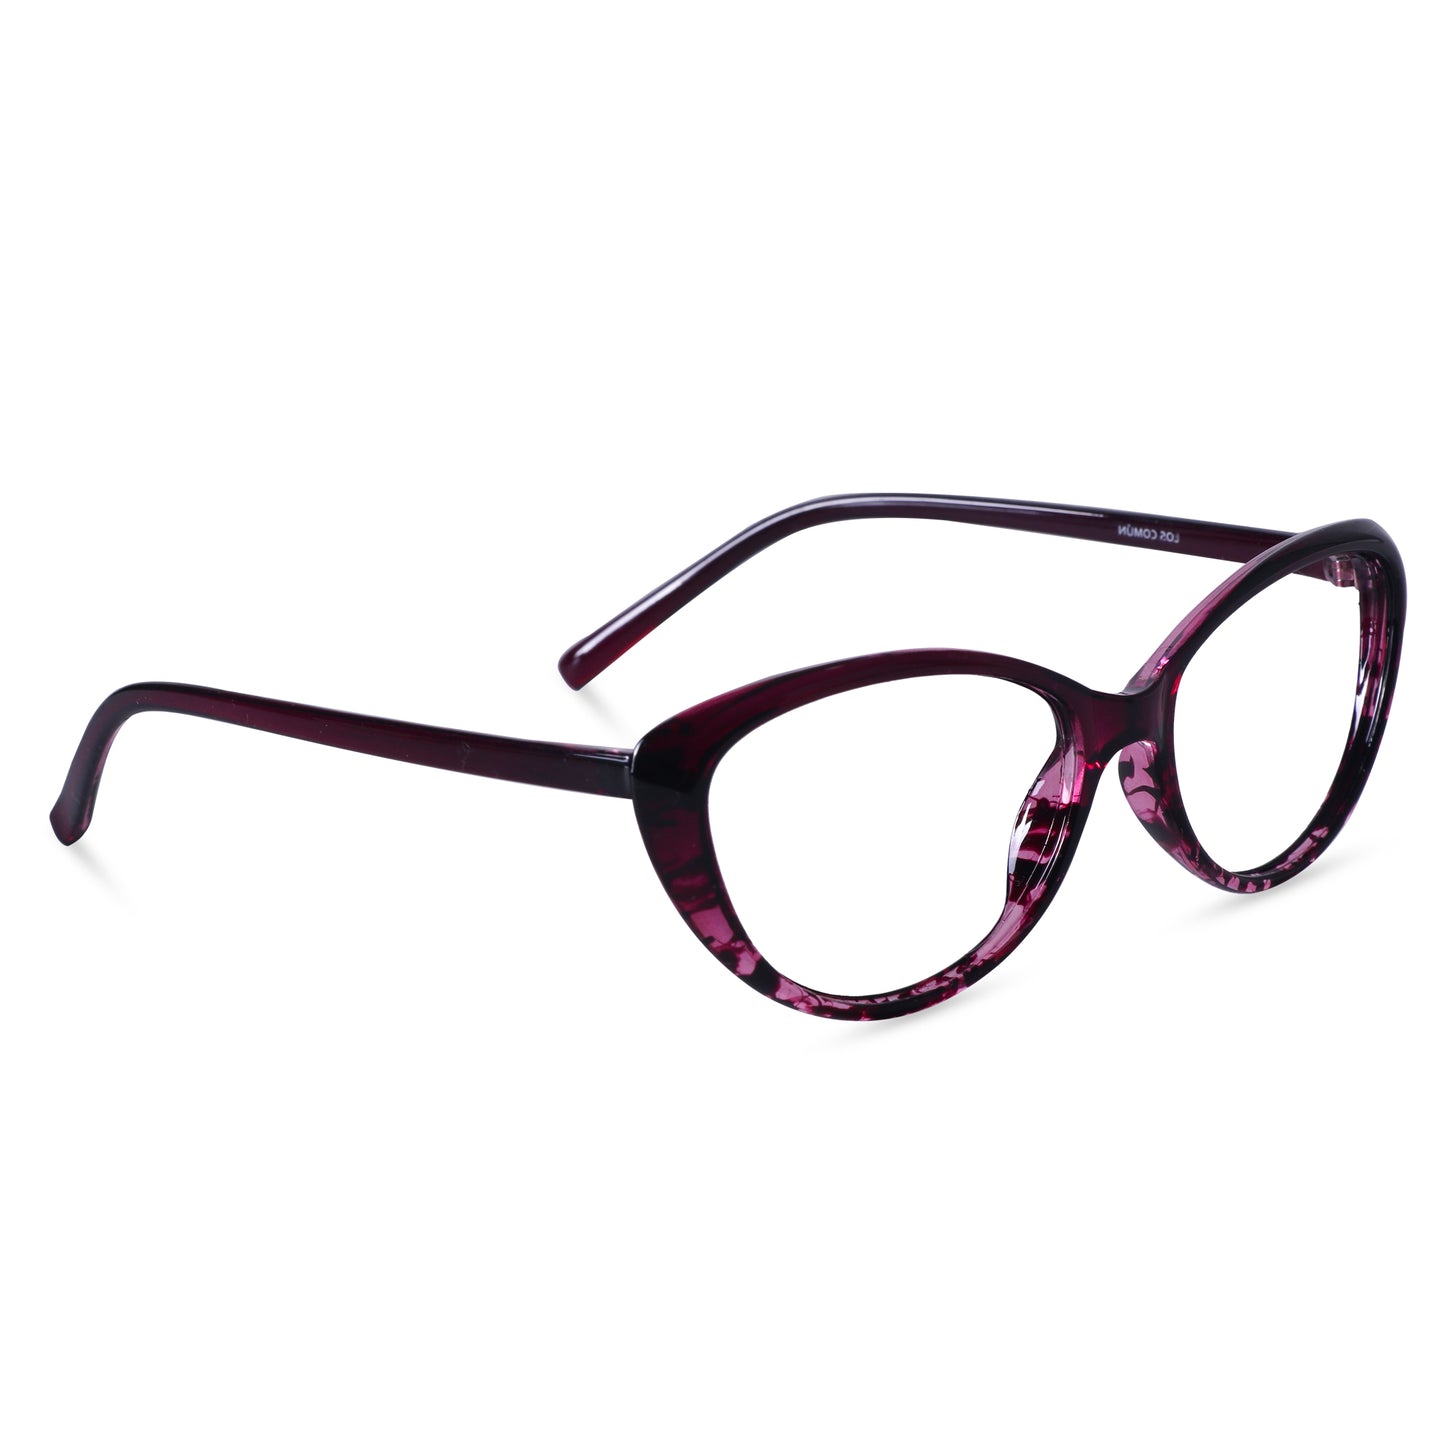 Loscomun Computer Glasses Purple Tortoise Cateye Eyeglasses